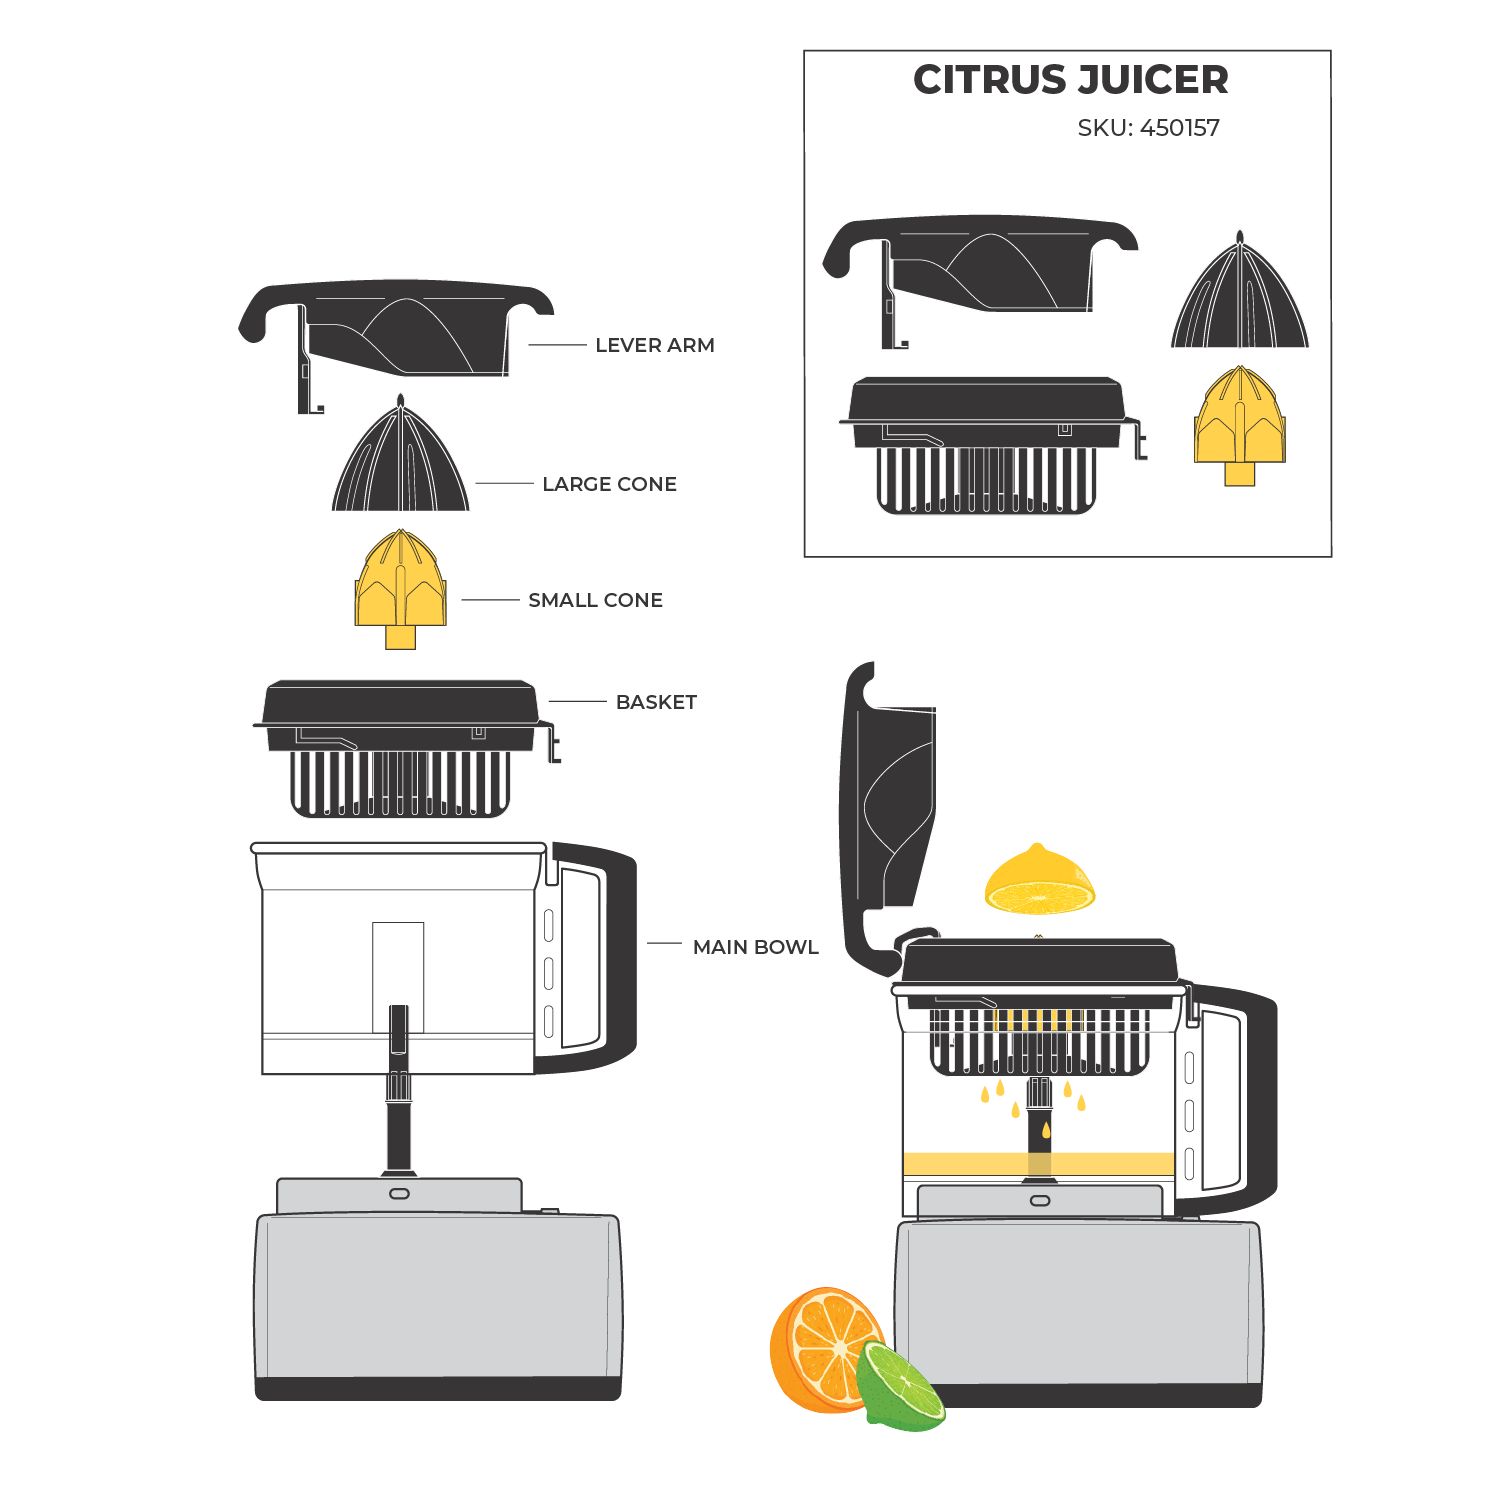 Citrus Juicer Attachment